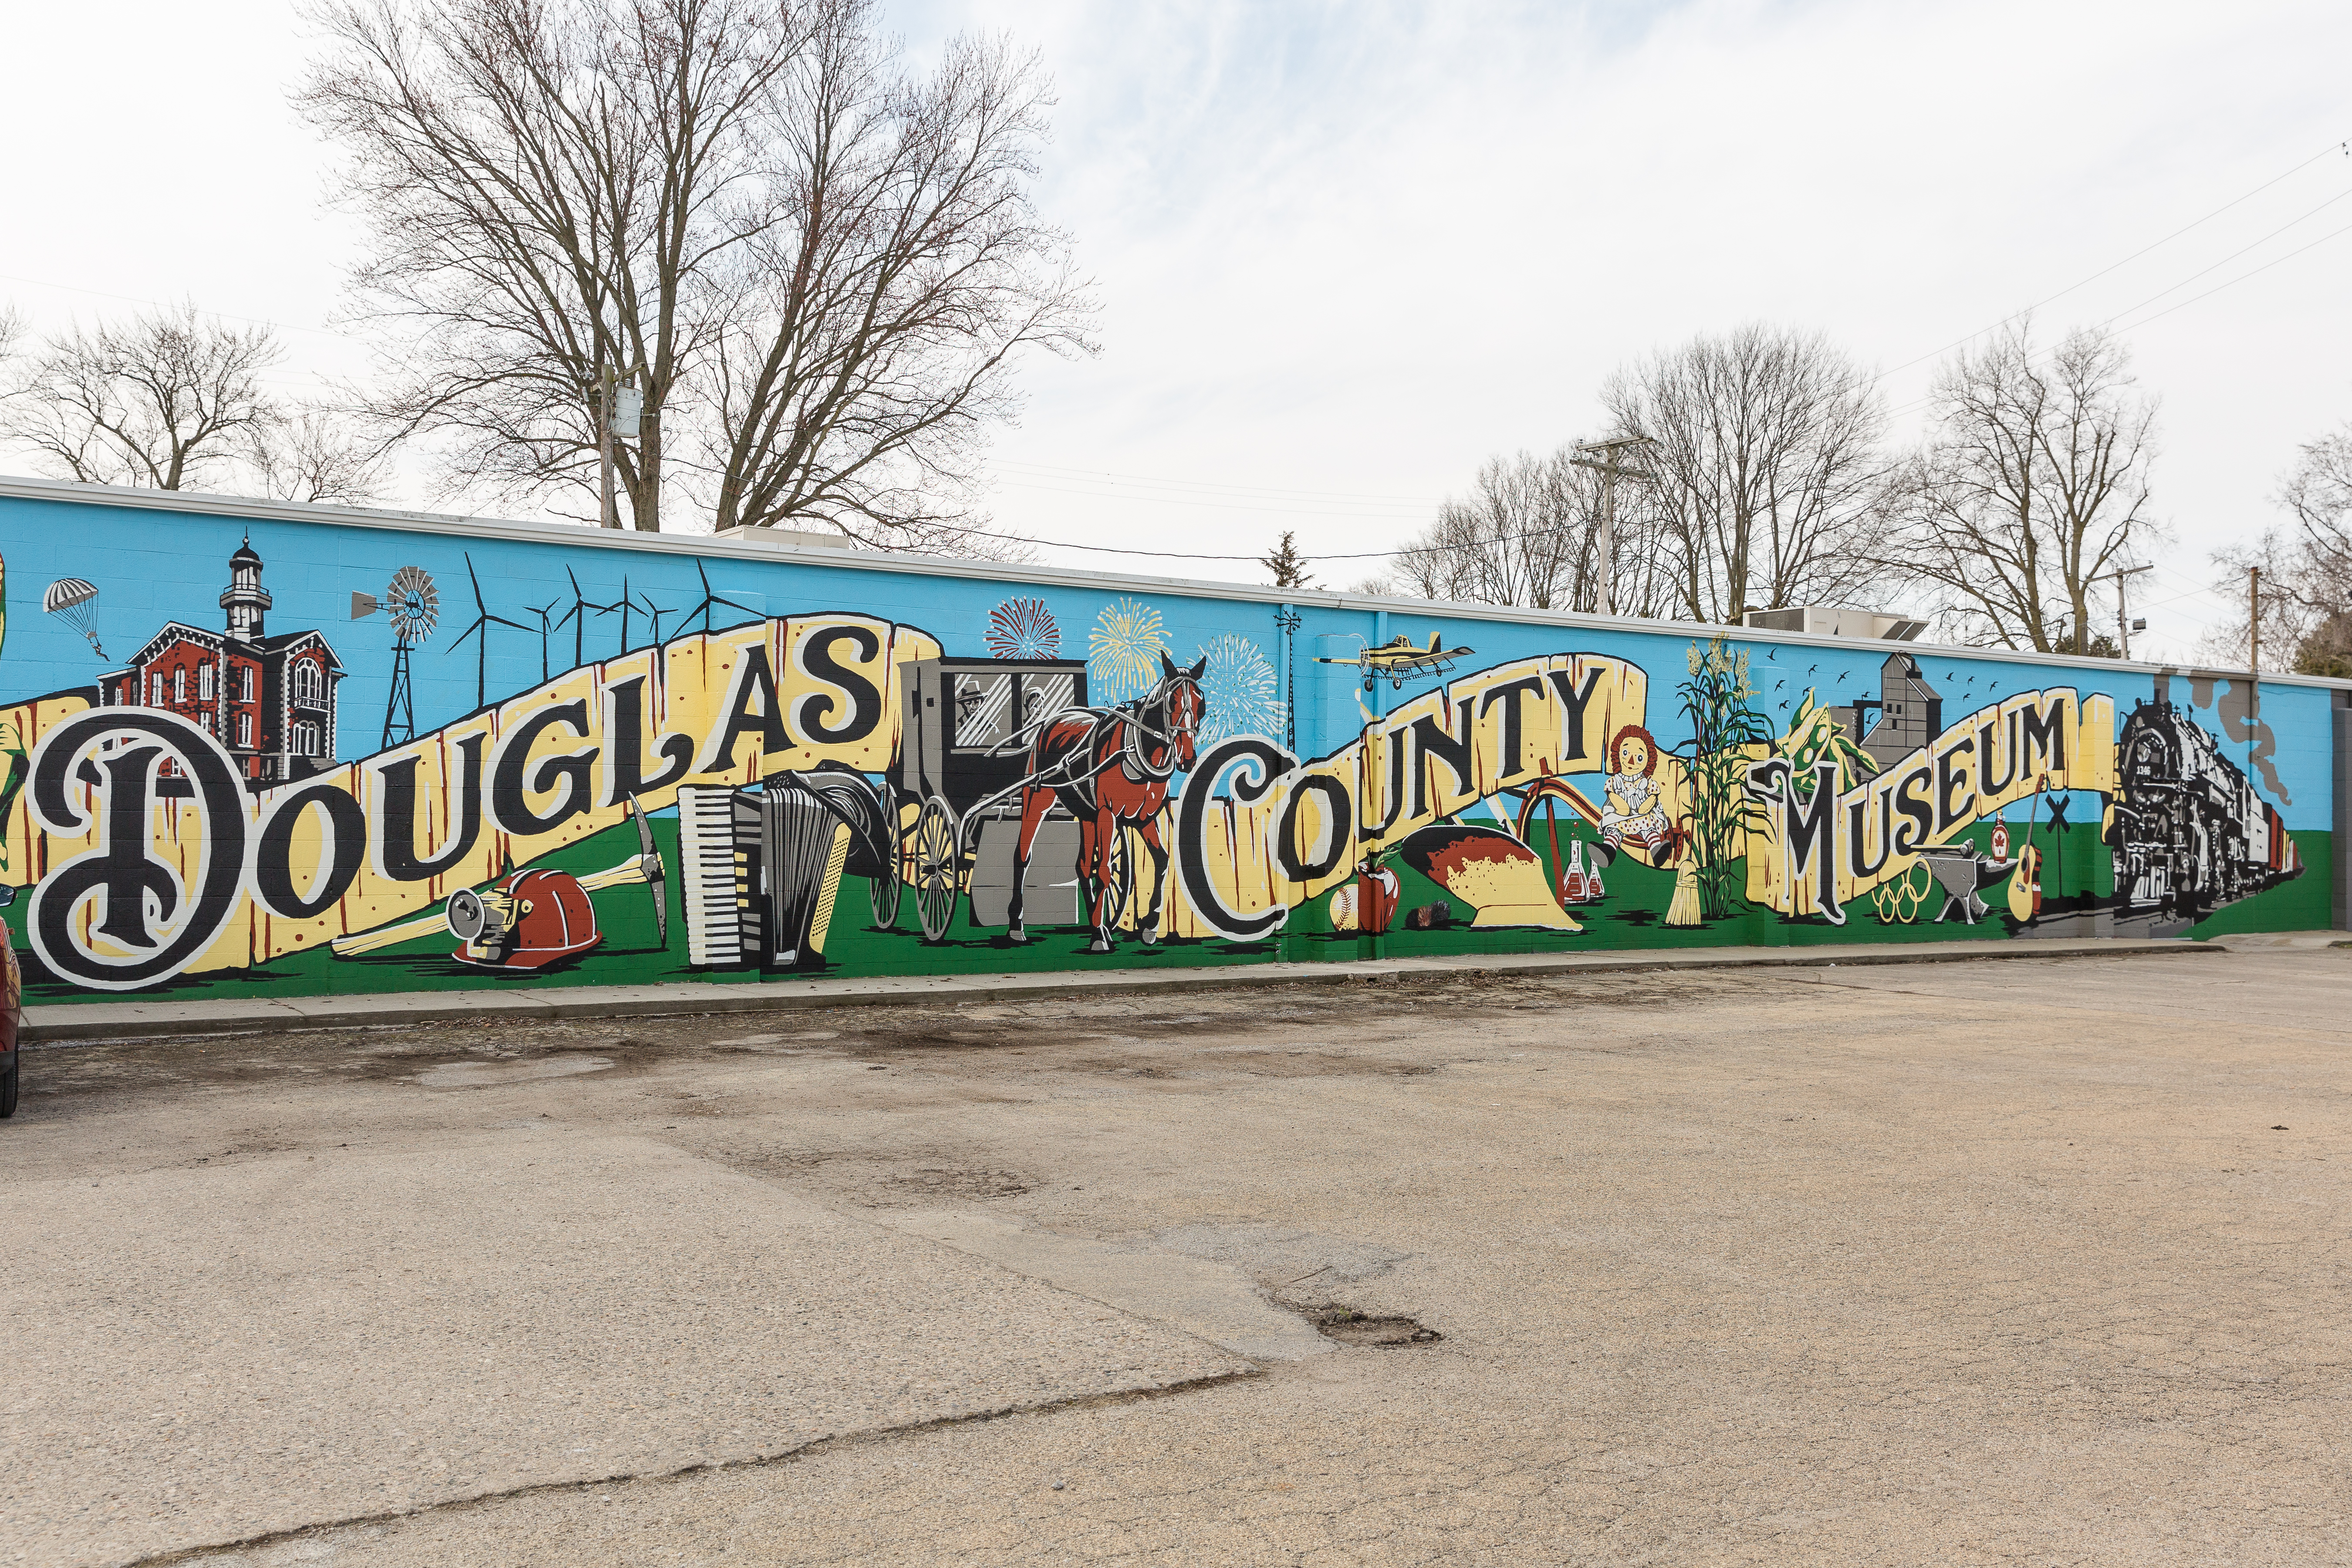 Douglass County Museum mural.